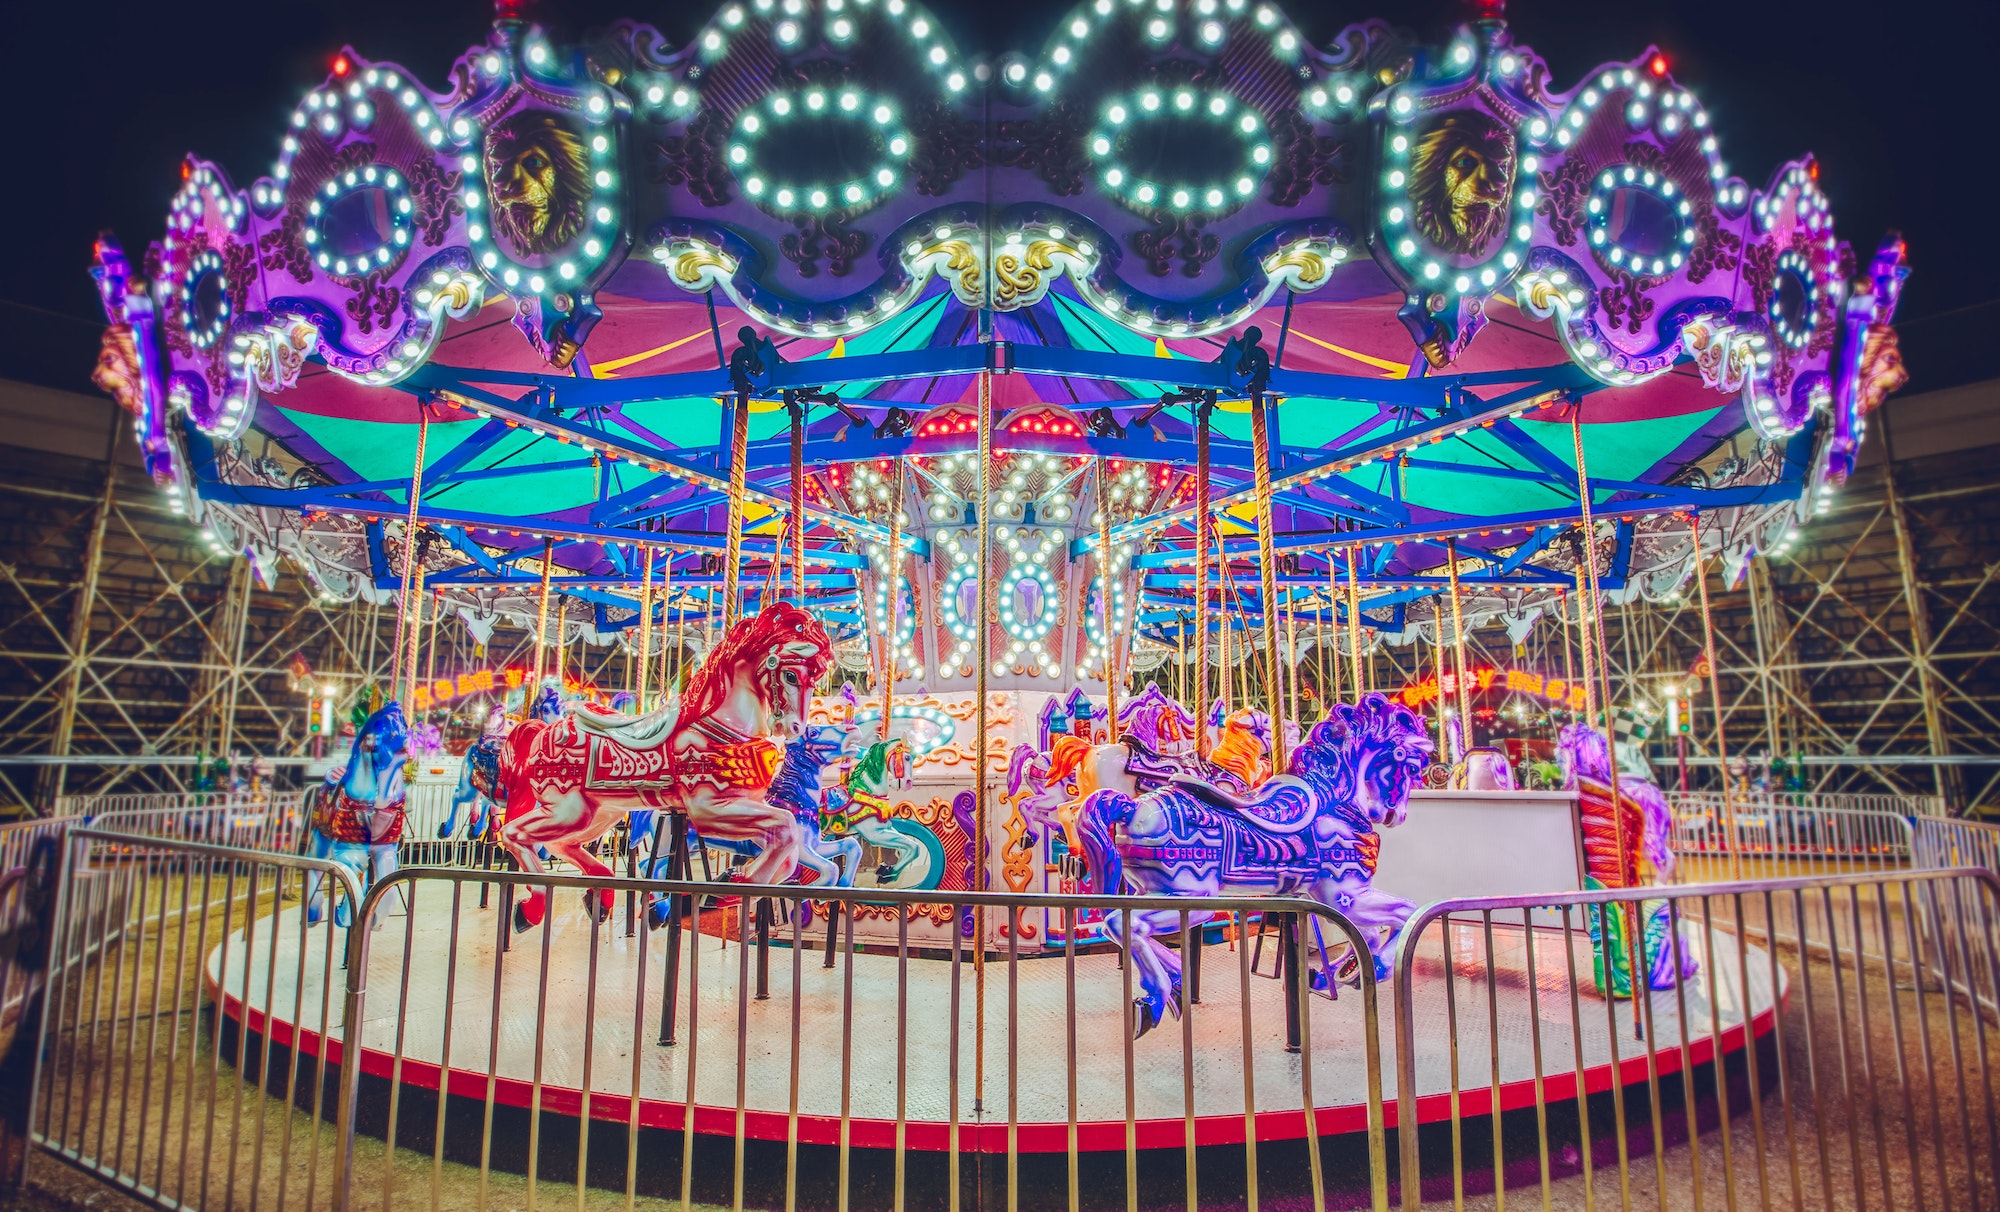 Fair.Carousel with horses. Horse rides kids carousel at the fair